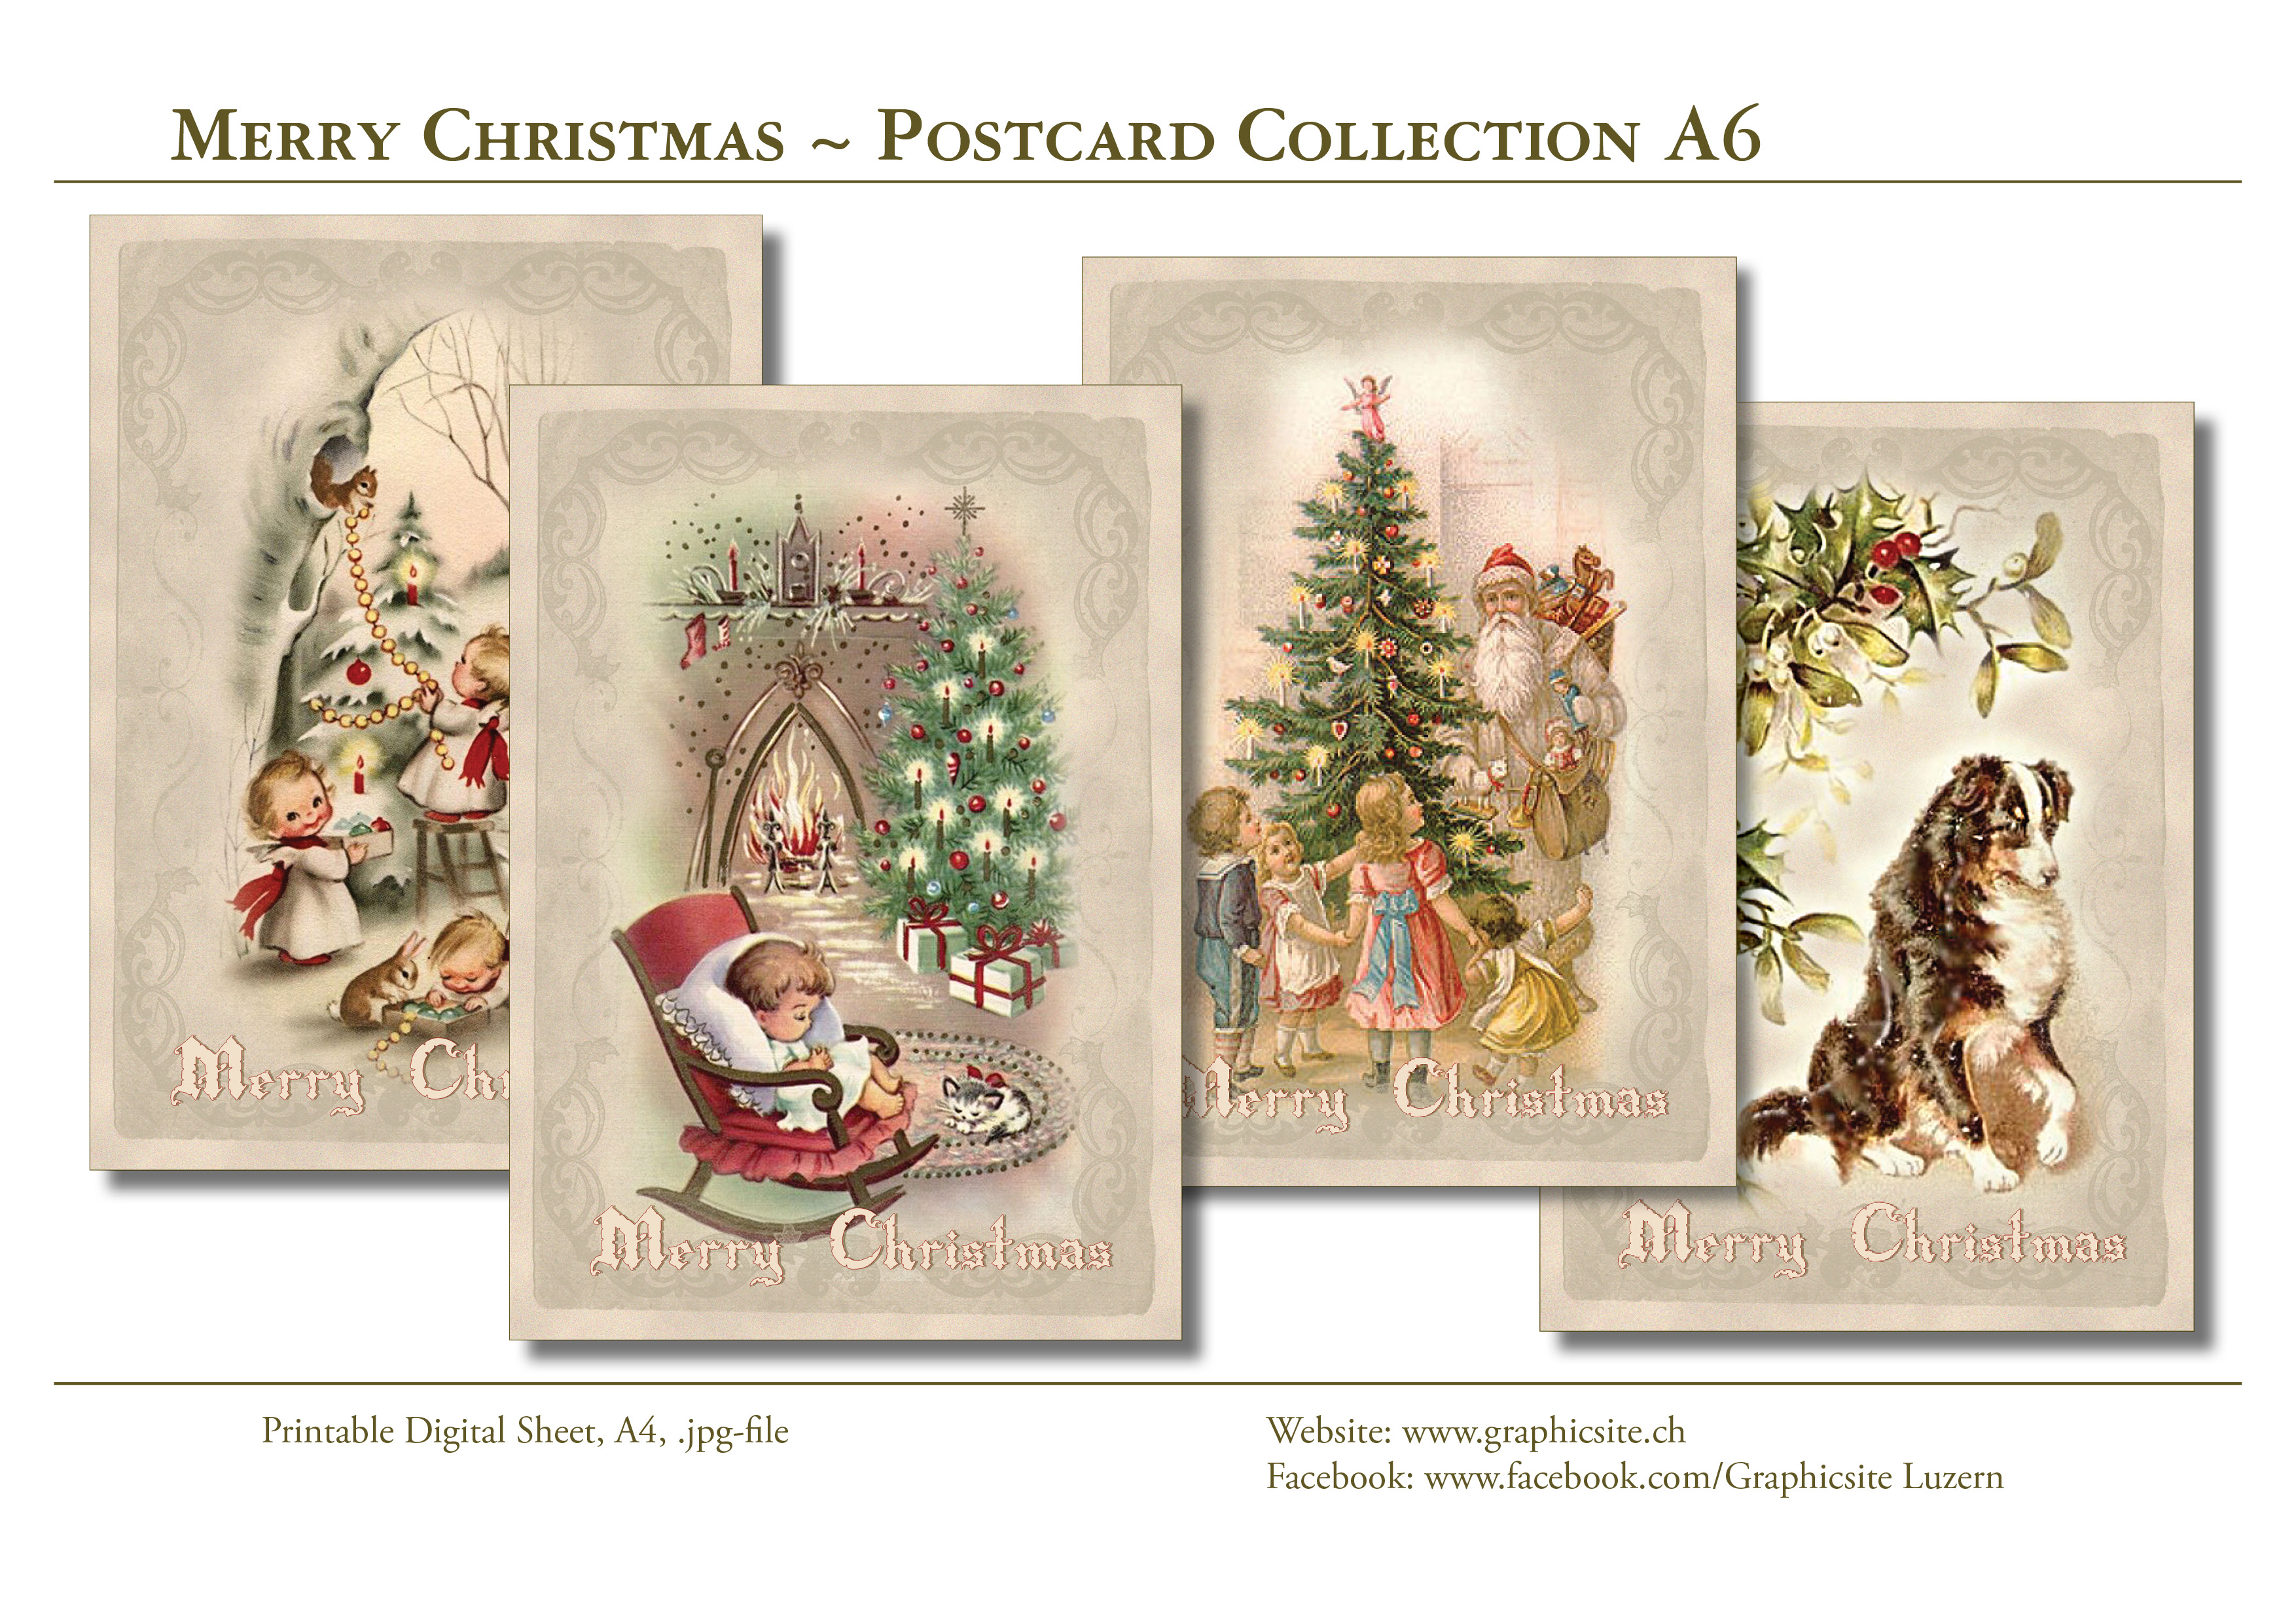 Printable Digital Sheets, download, Christmas, Greeting Cards, Postcards, Santa Claus, Winter,